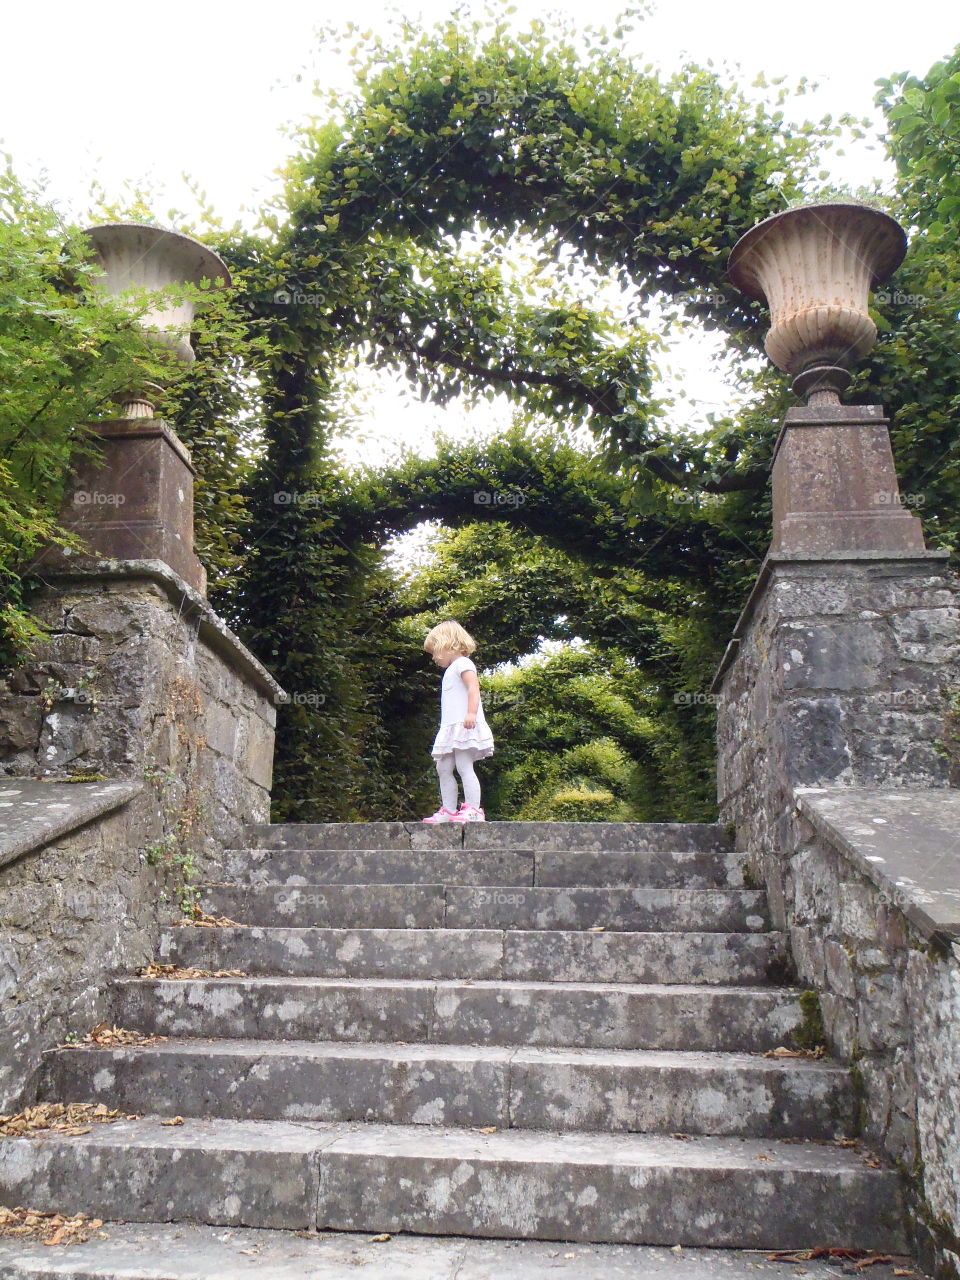 Enjoying Birr castle gardens . In Ireland 